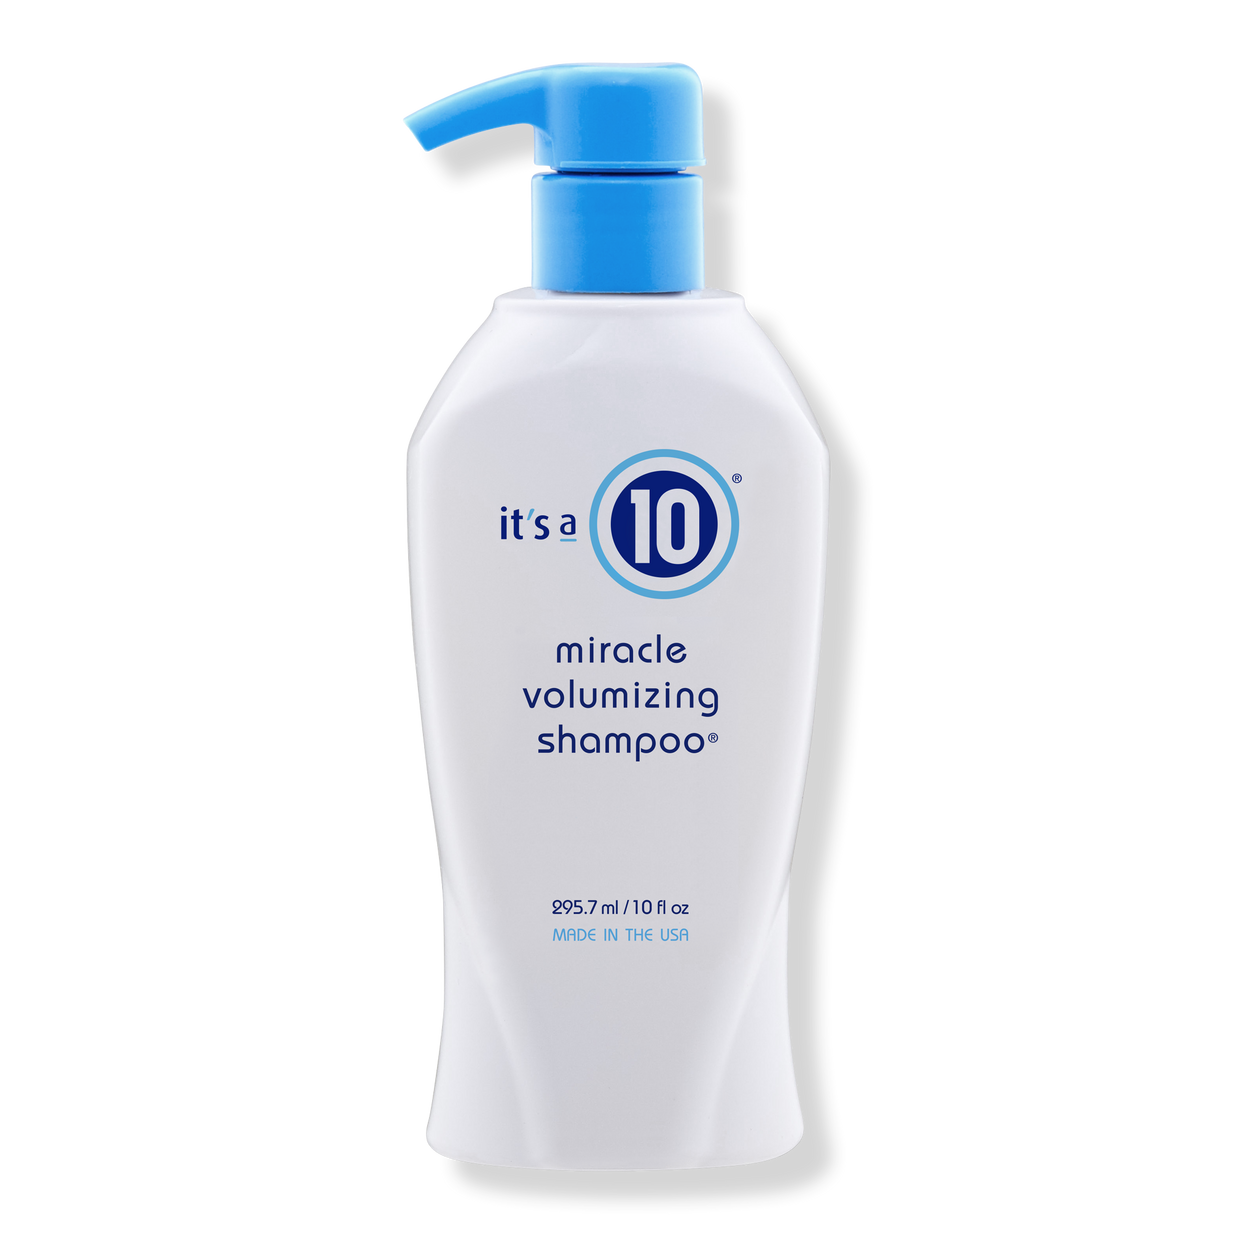 Miracle Volumizing Shampoo - 10 | Ulta Beauty